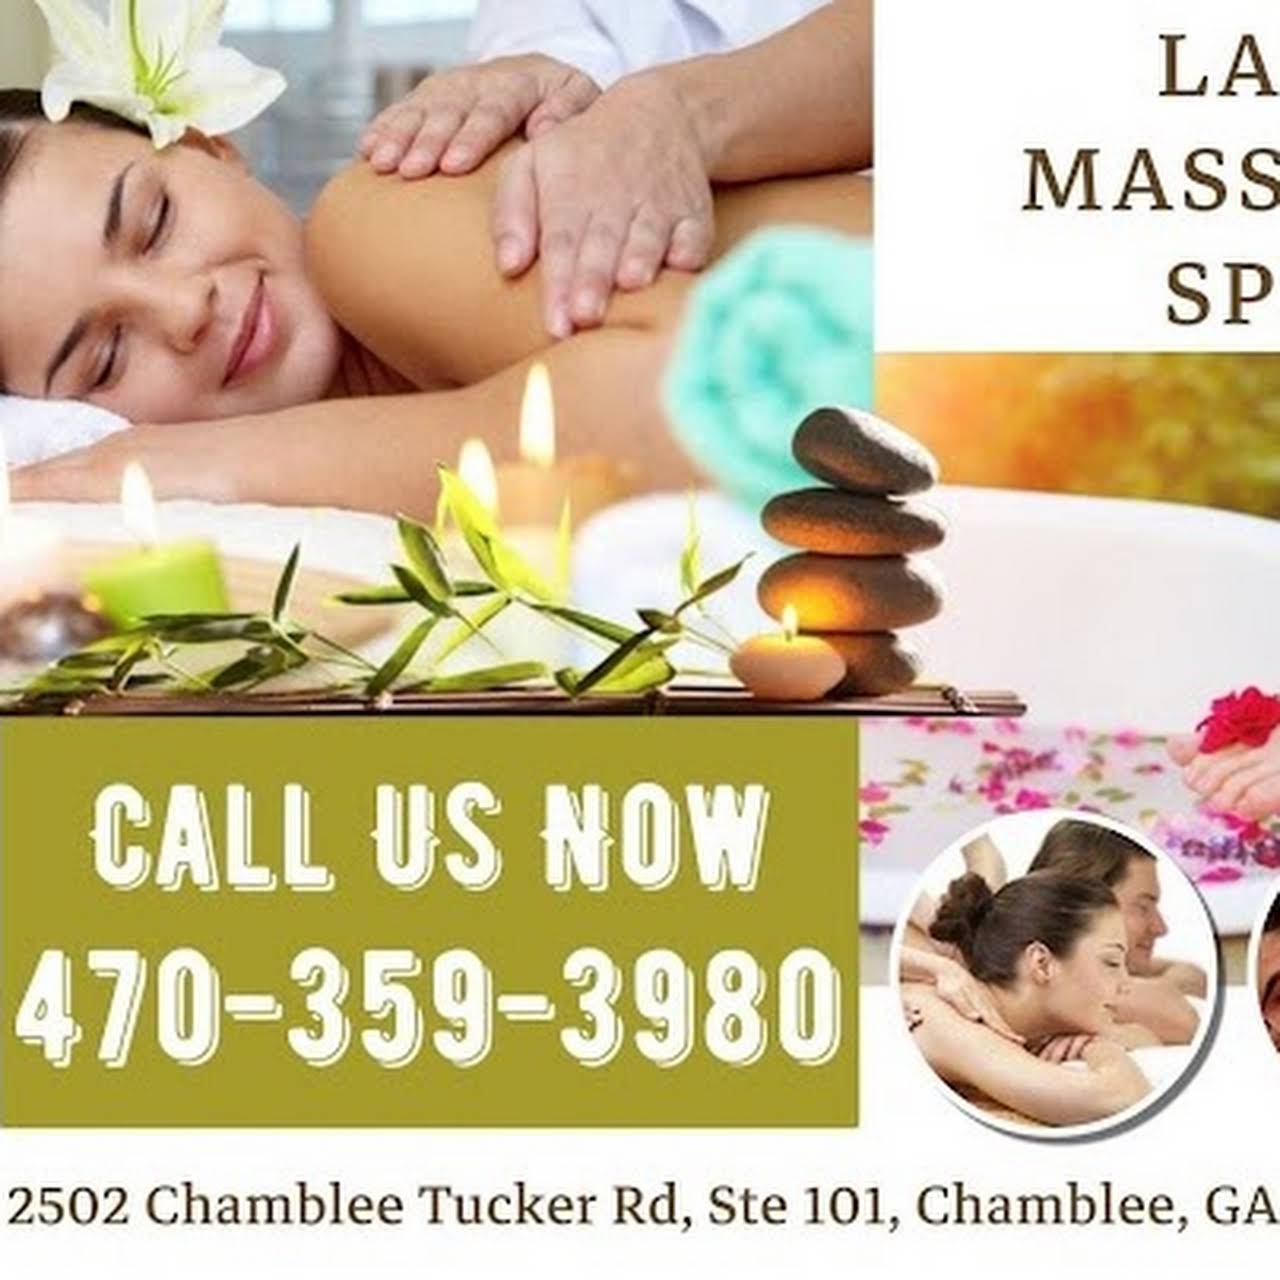 Lan Massage Spa - Massage Therapist in Chamblee